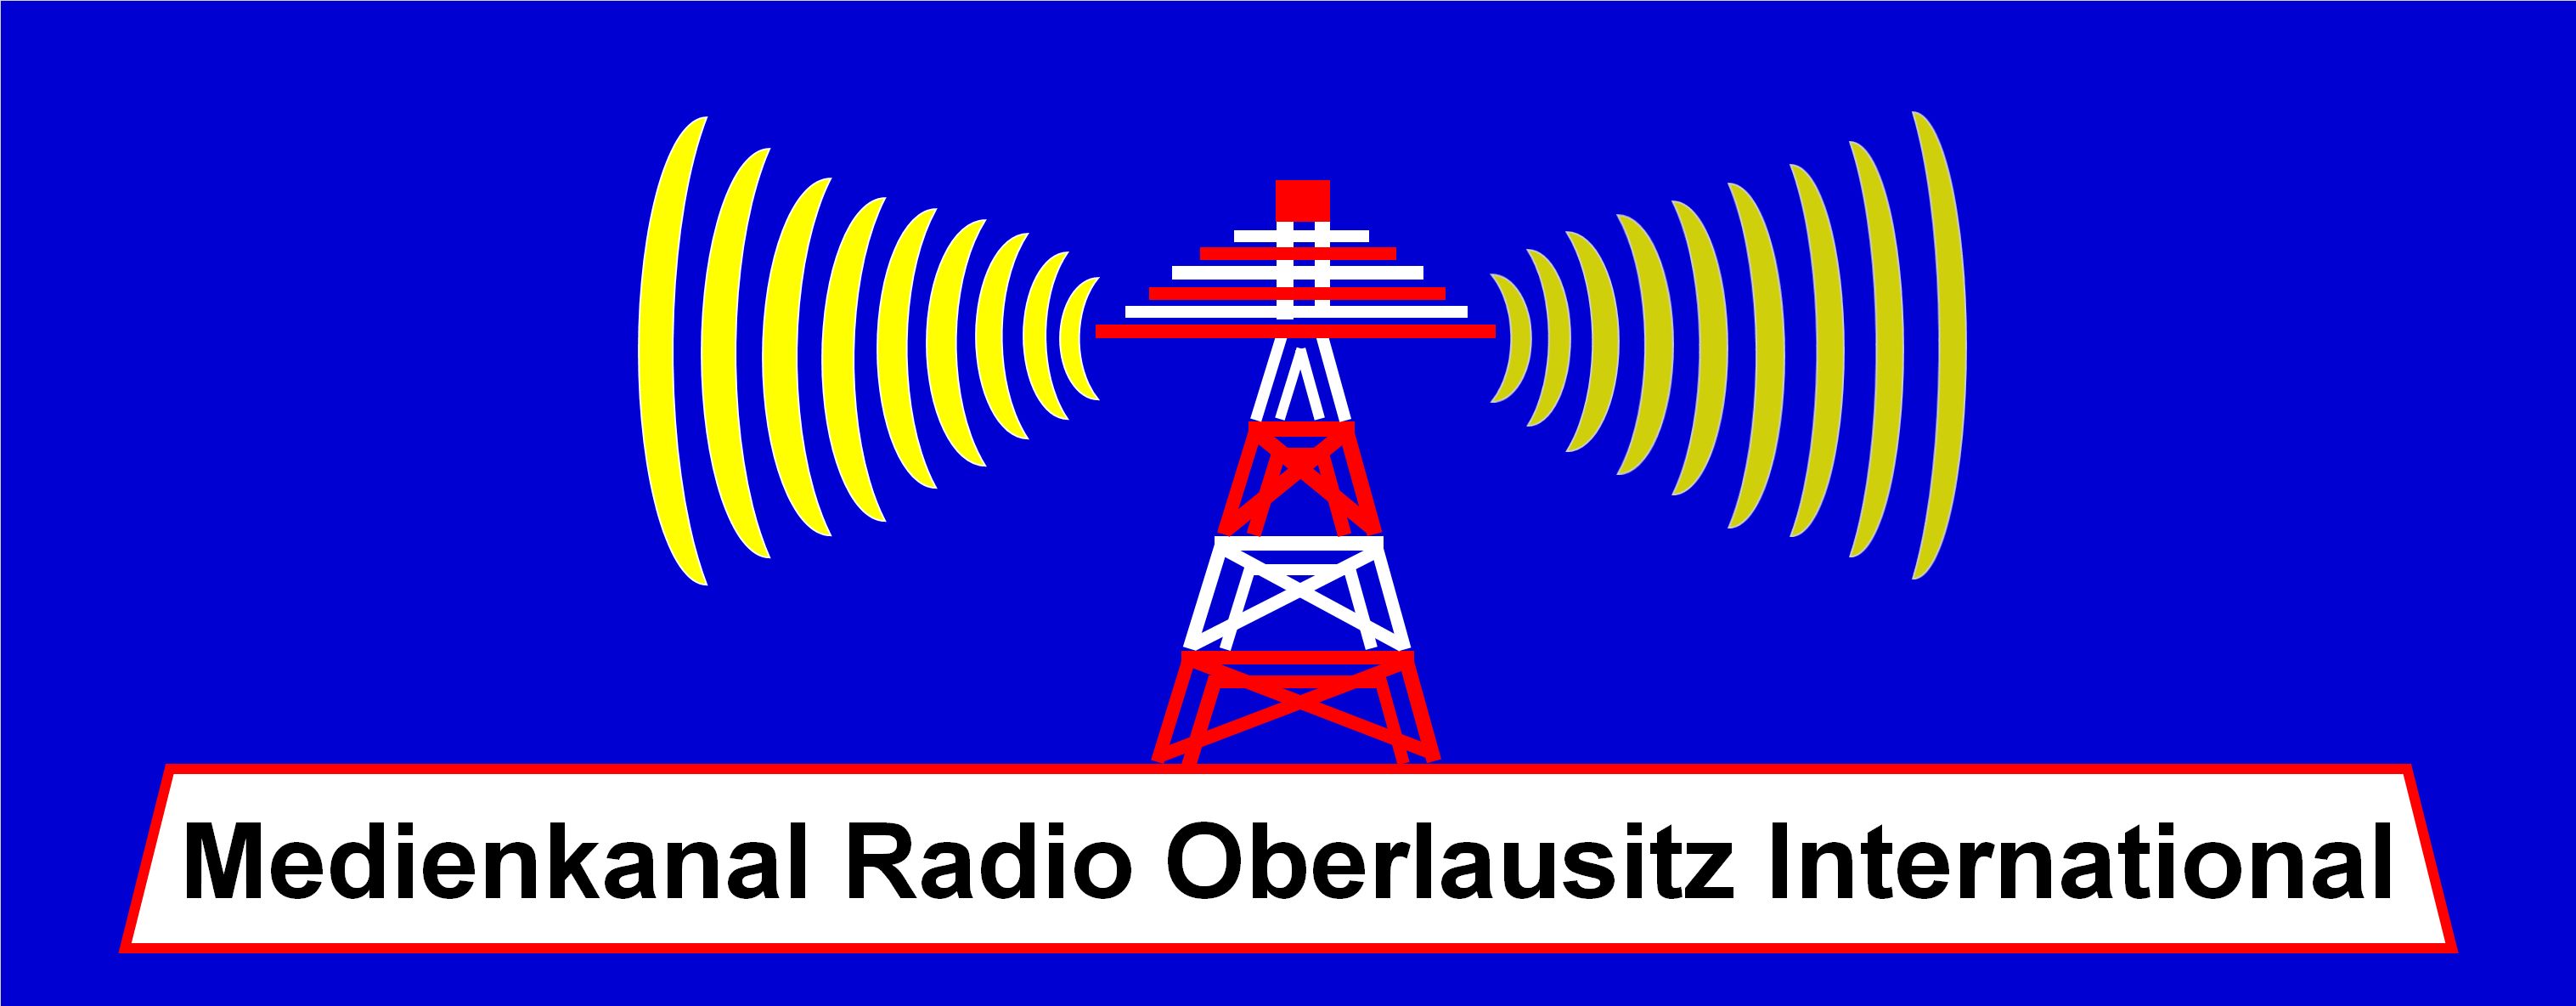 Medienkanal Radio Oberlausitz International